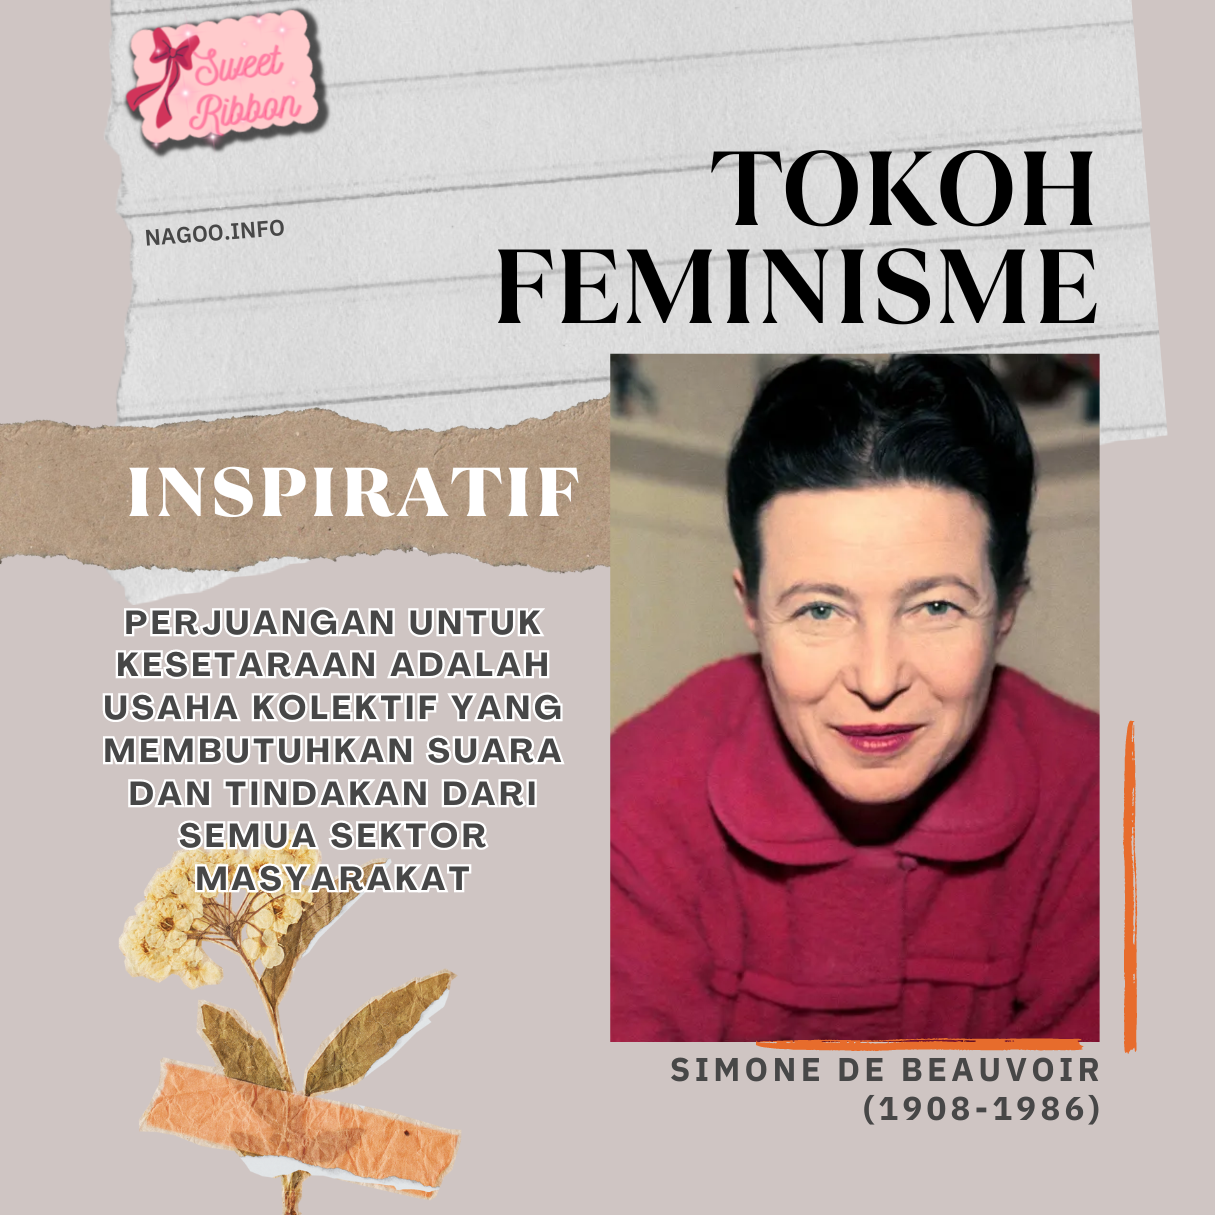 Tokoh Feminisme: Simone de Beauvoir